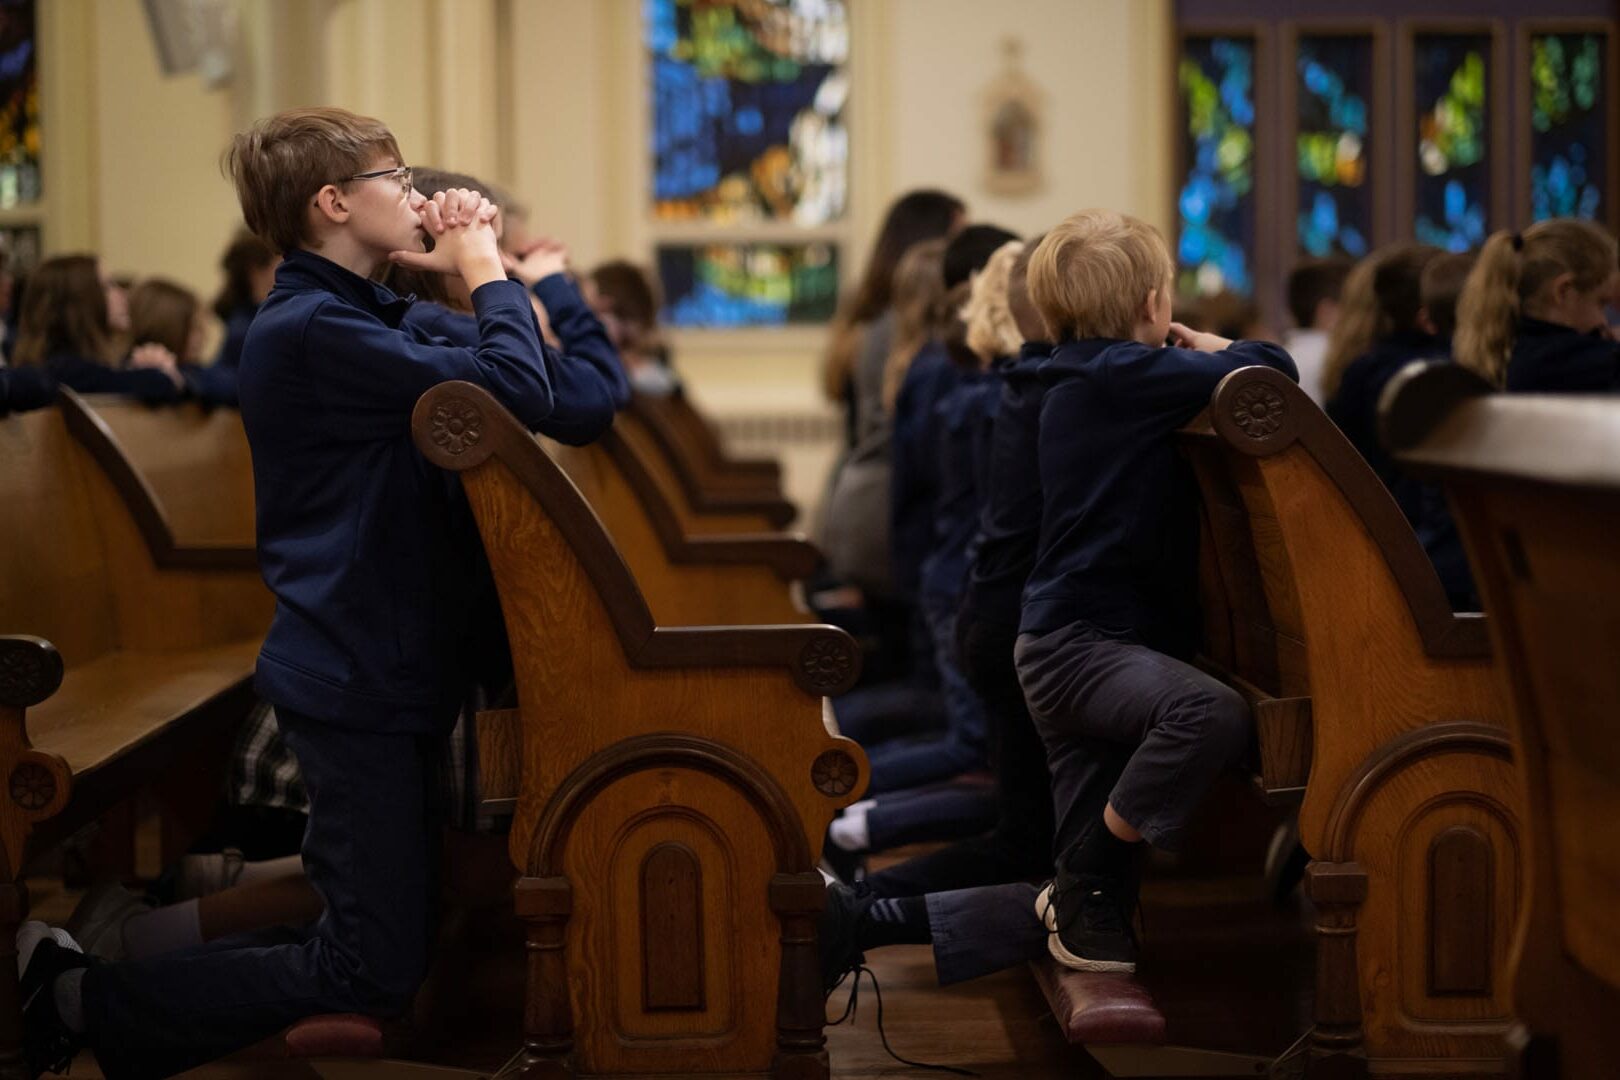 Group of boys kneeling in pews in a church.